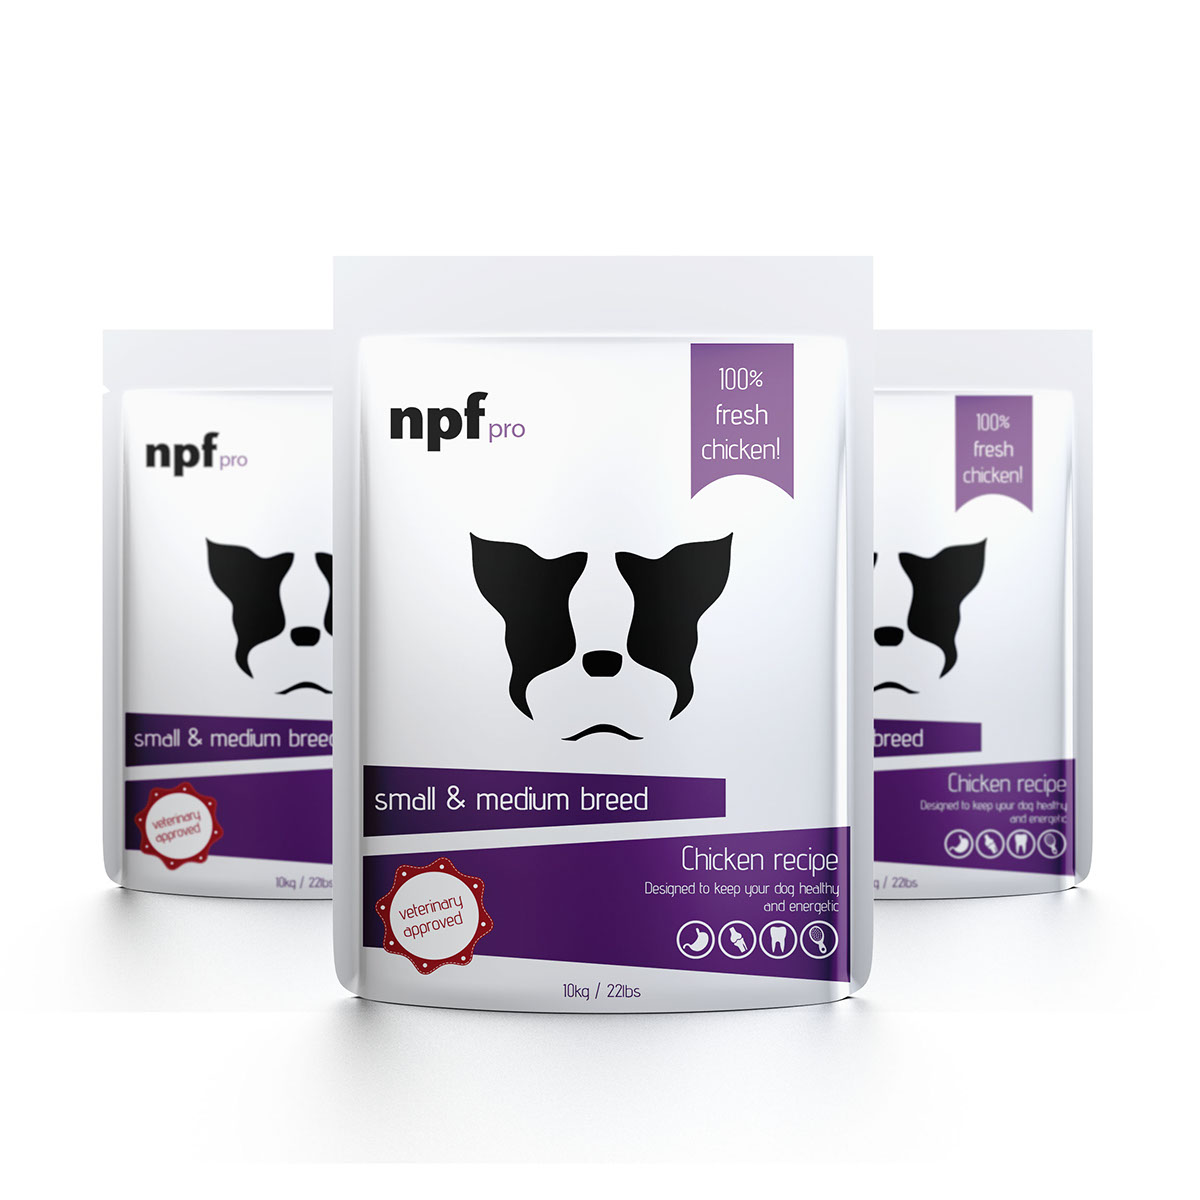 pet food package nitsiakos fresh Quality grafistiki dog food cat food Pet Food Packaging